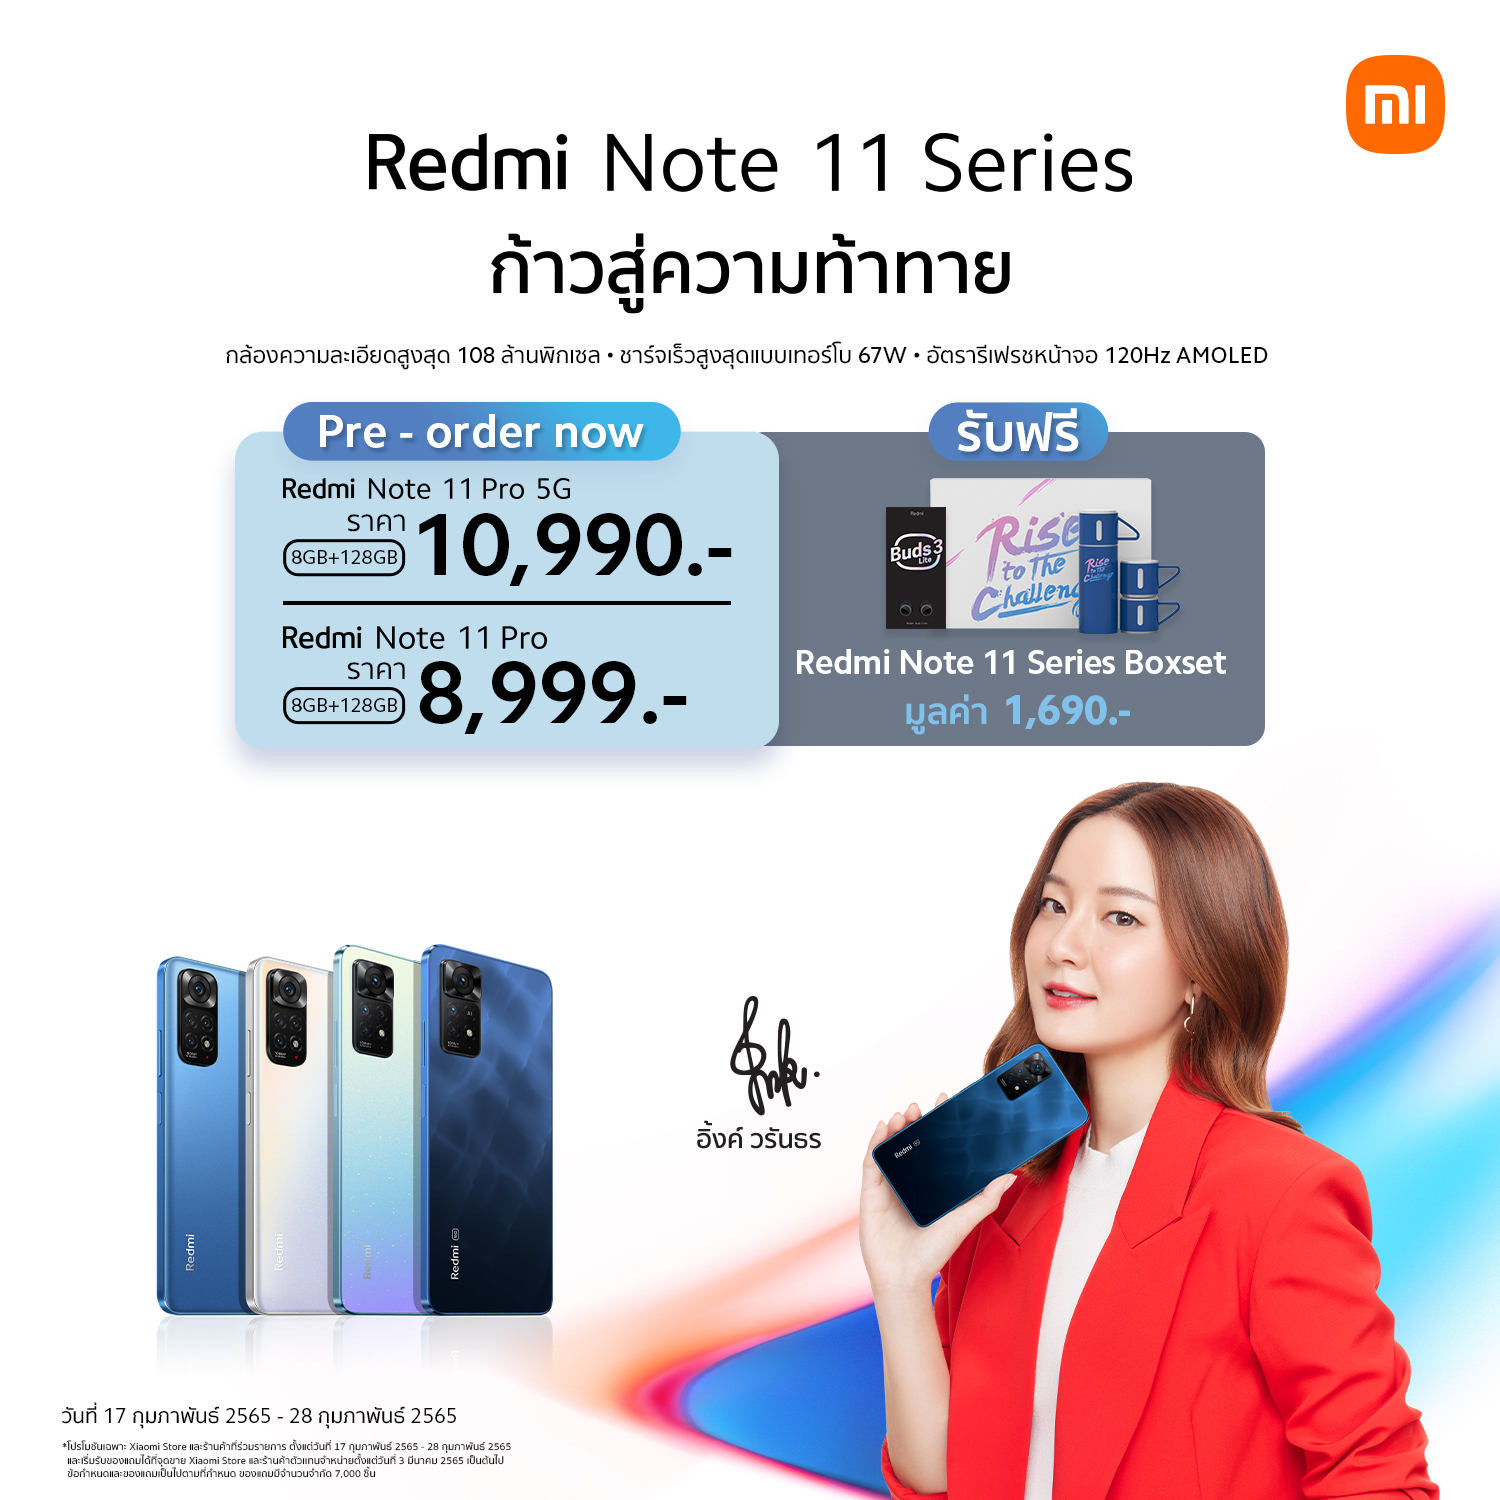 Redmi Note 11 Pro 5G และ Redmi Note 11 Pro พร้อมให้คุณเป็นเจ้าของแล้ว! กล้องระดับโปร 108MP ชาร์จไว 67W turbo และหน้าจอ 120Hz AMOLED สั่งจองระหว่าง 17 - 28 ก.พ. นี้ รับฟรี! Redmi Note 11 Series Boxset มูลค่า 1,690 บาท